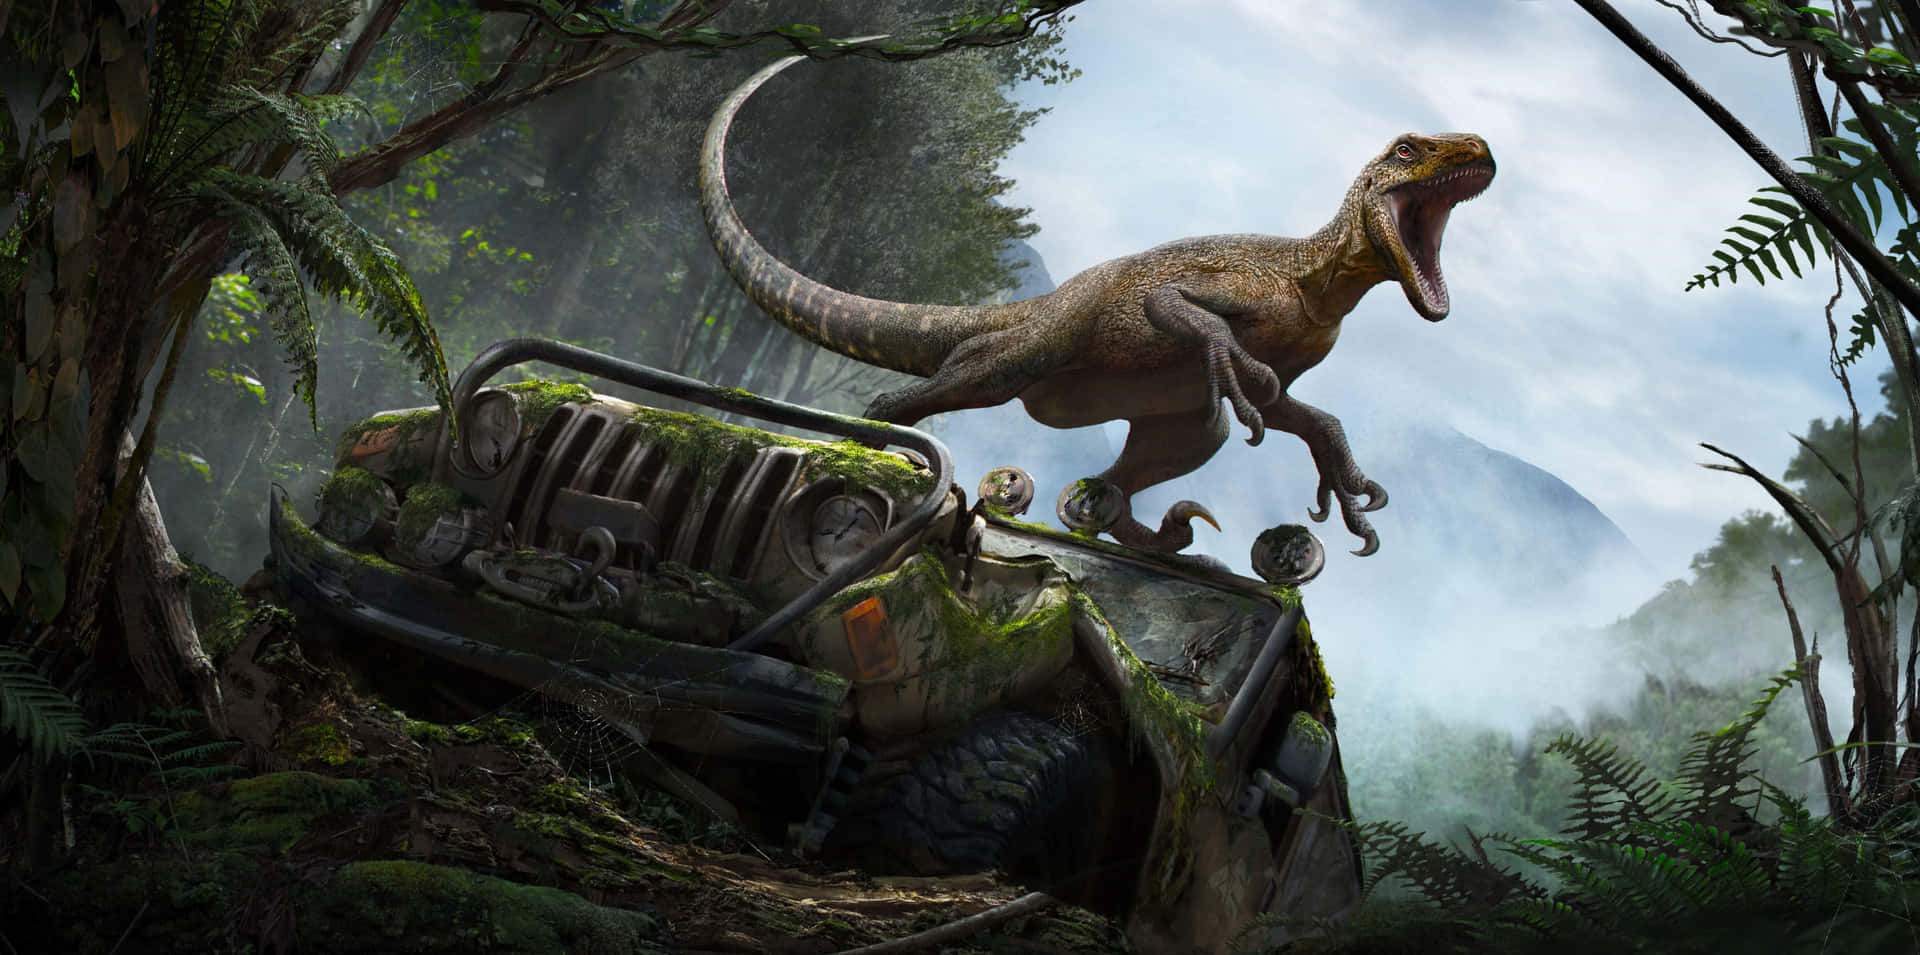 Tyrannosaurus Rex Overturned Jeepin Jungle Wallpaper